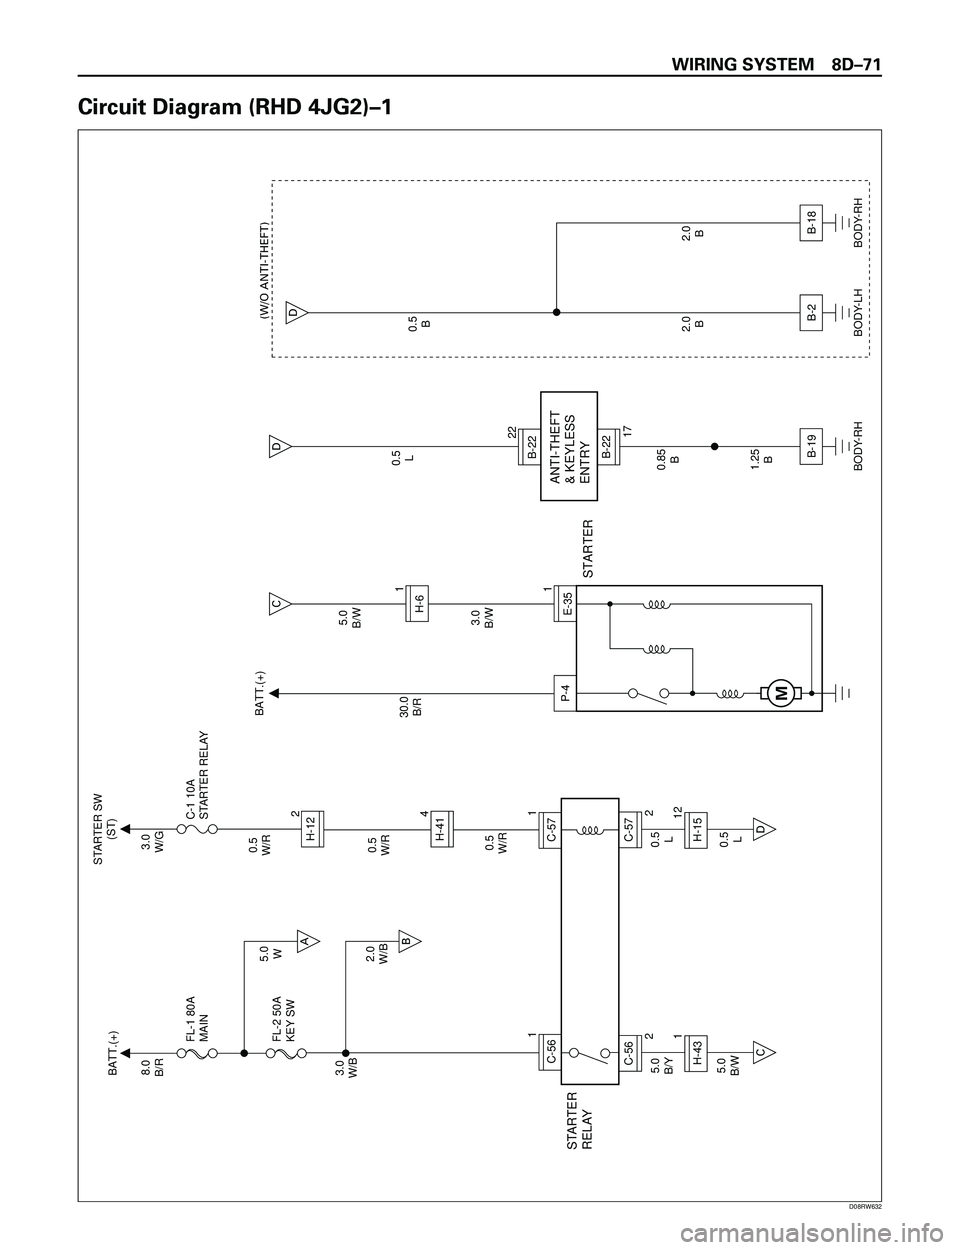 ISUZU TROOPER 1998  Service Repair Manual WIRING SYSTEM 8DÐ71
Circuit Diagram (RHD 4JG2)Ð1
C
D
D (W/O ANTI-THEFT)
D
STARTERANTI-THEFT
& KEYLESS
ENTRY
3.0
B/W
5.0
B/W5.0
B/Y0.5
L
0.5
L5.0
B/W
0.5
L
0.5
B
2.0
B2.0
B 0.85
B
1.25
B 30.0
B/R
1 B